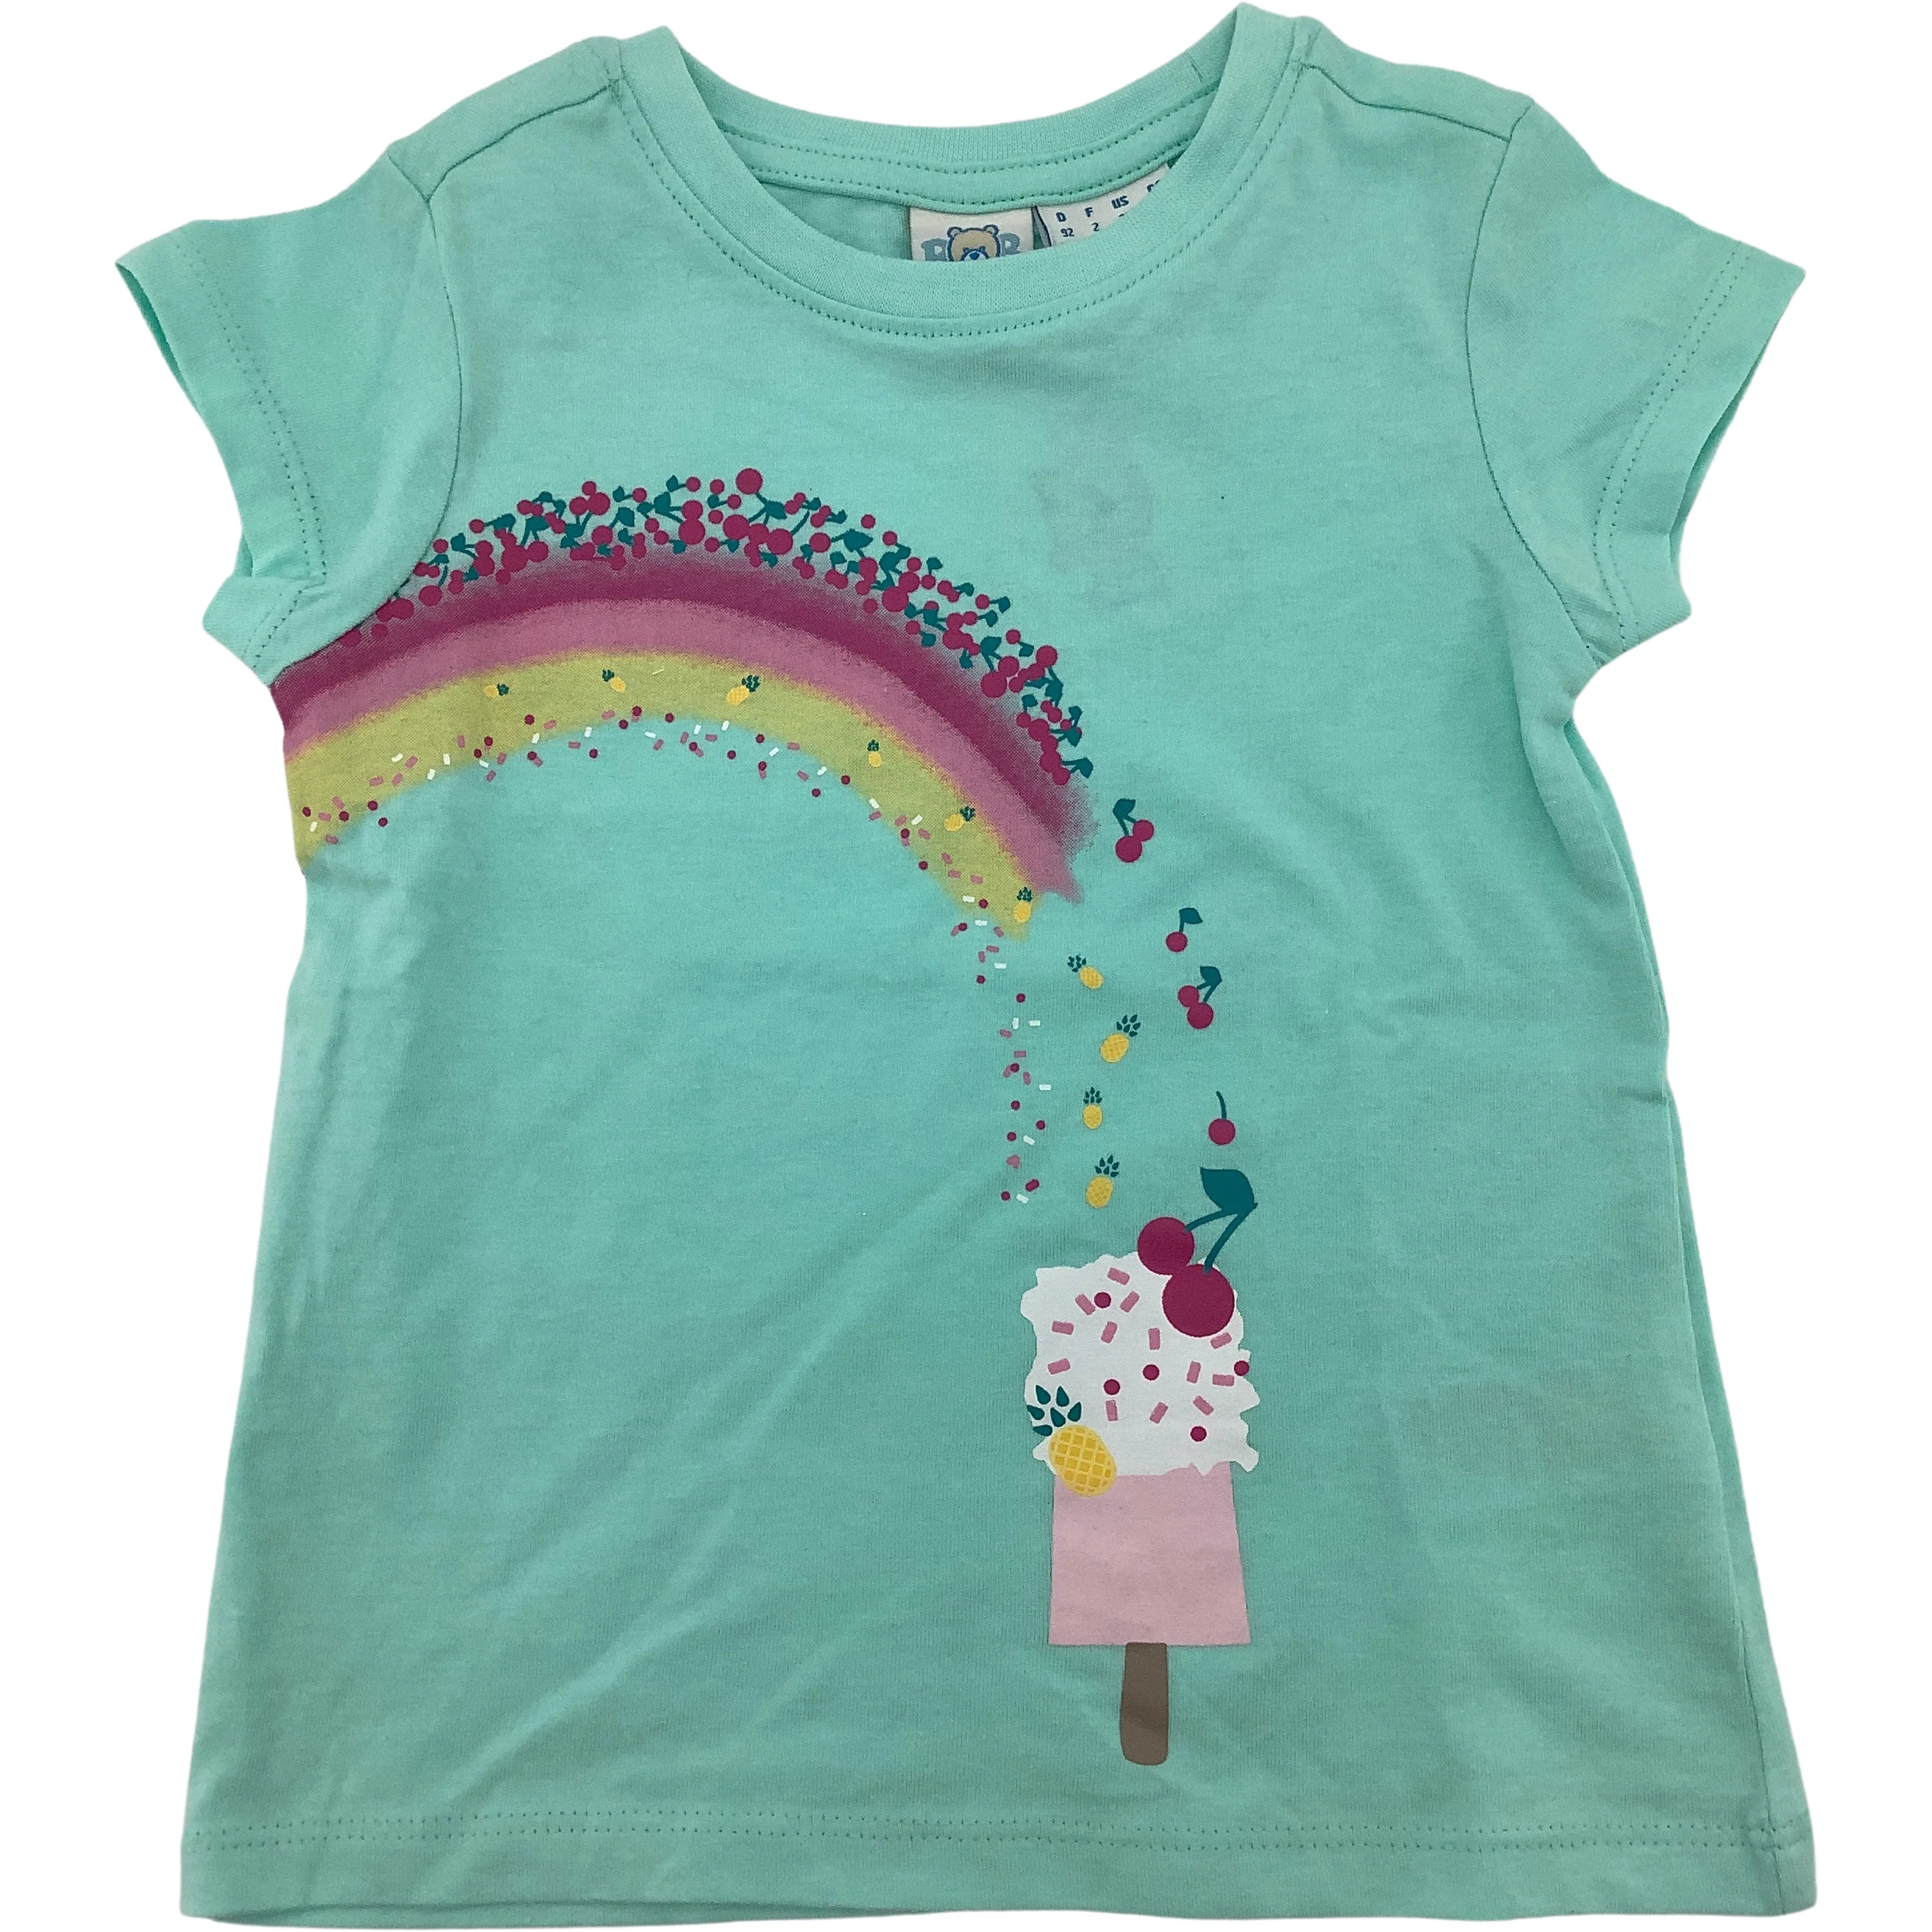 Bob Girl's T-Shirt / Mint / Kid's Summer Clothes / Size 2T